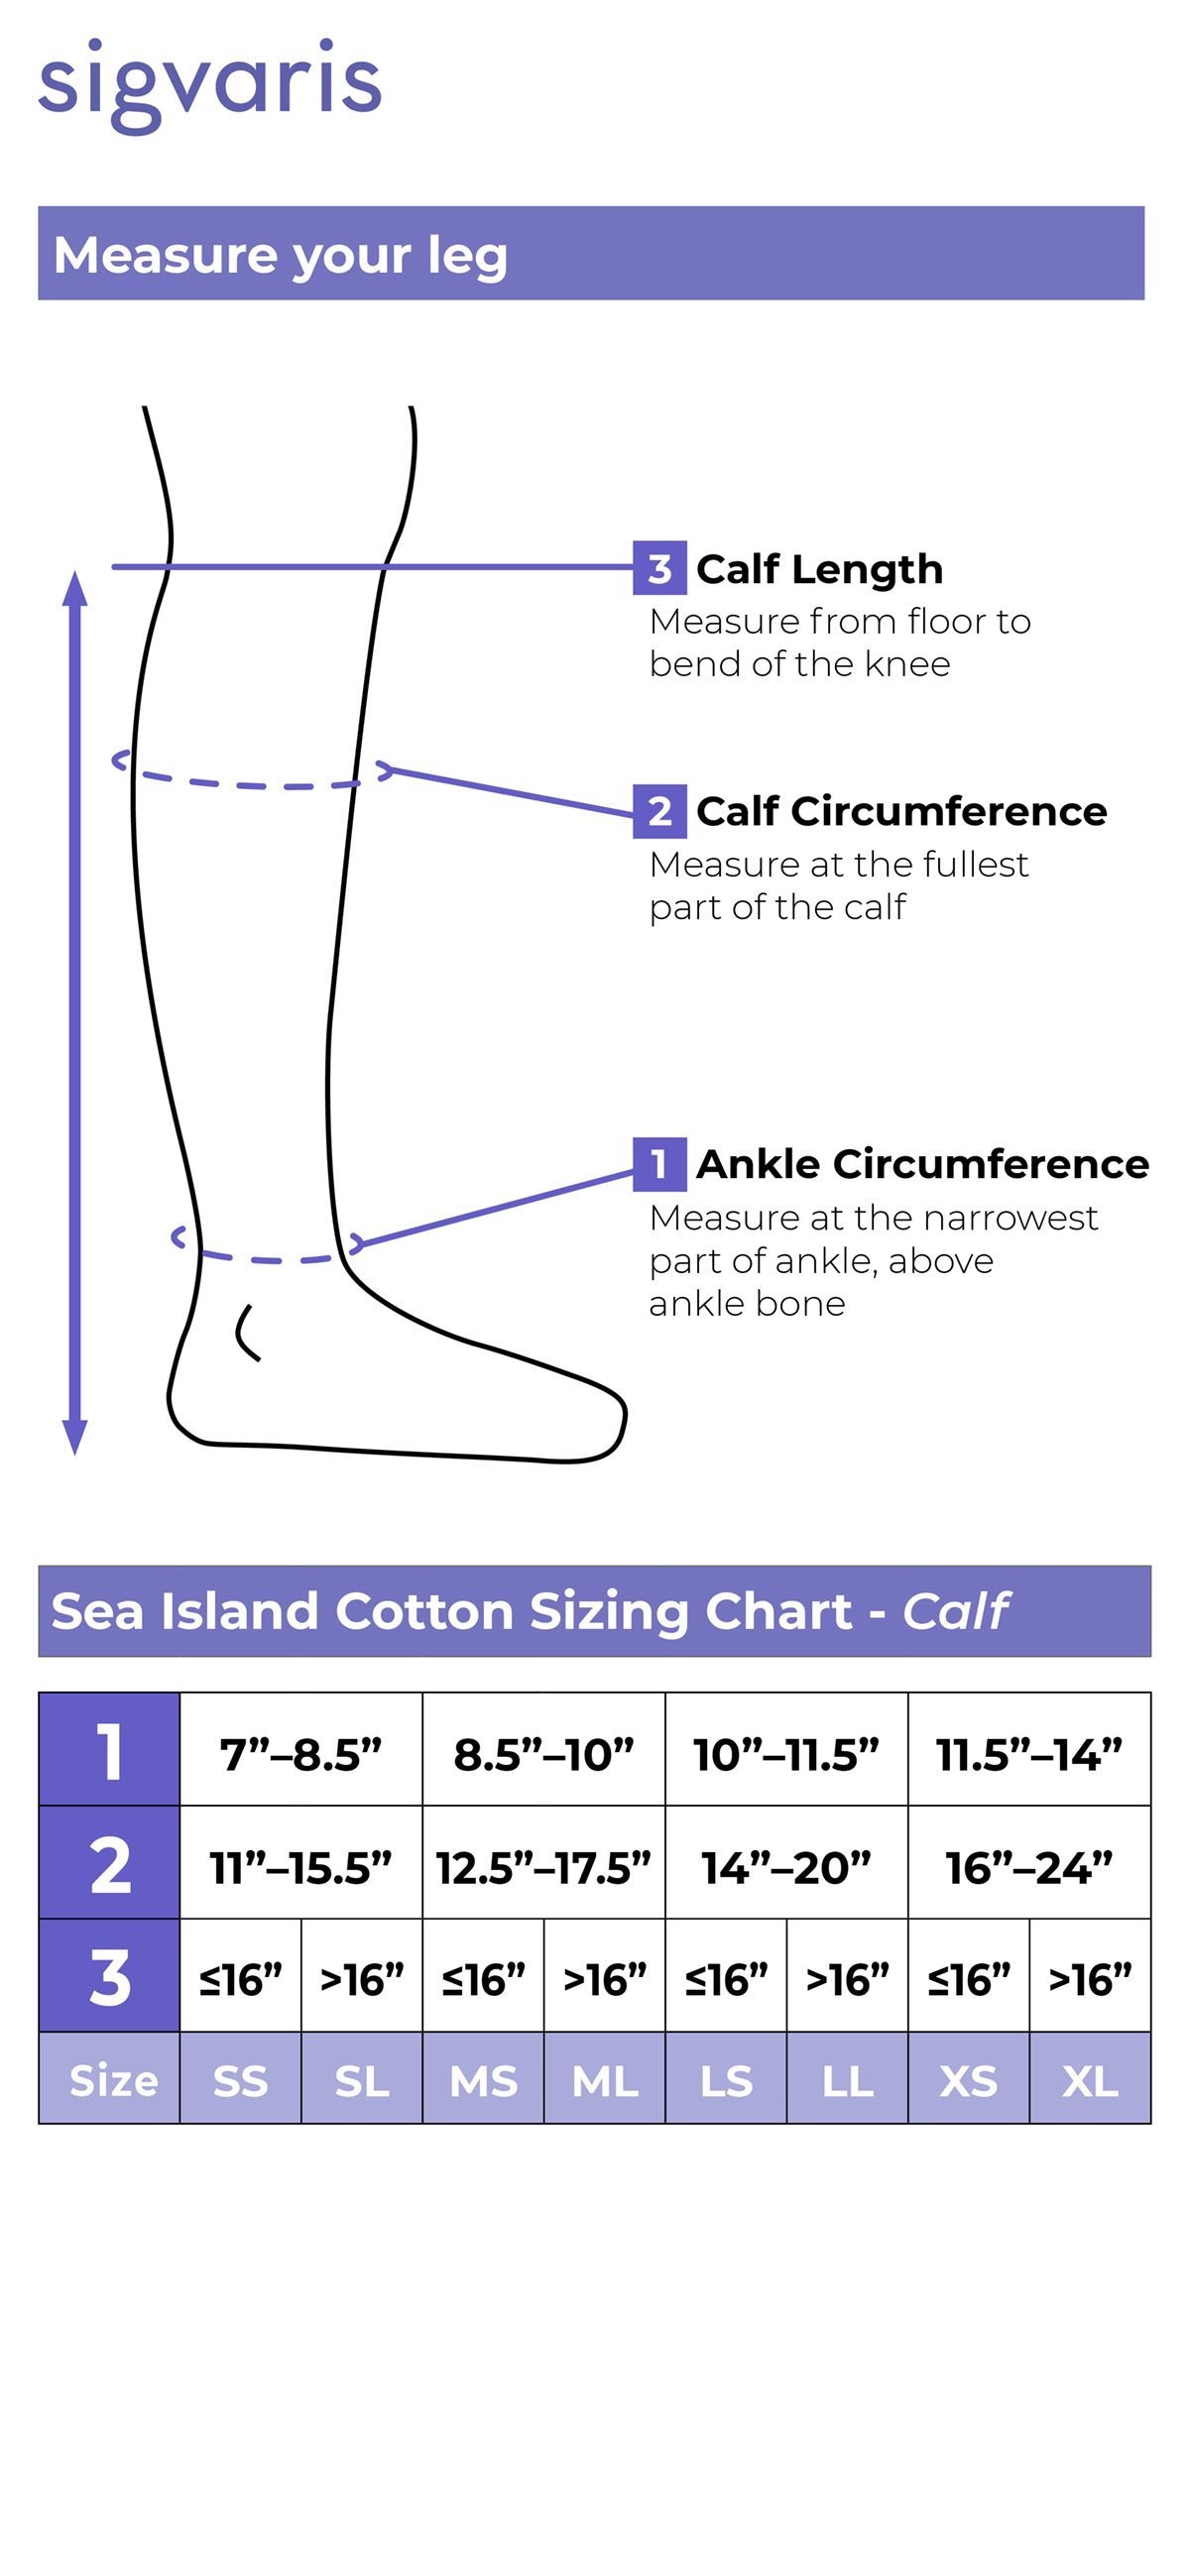 Men's Style Sea Island Cotton Calf